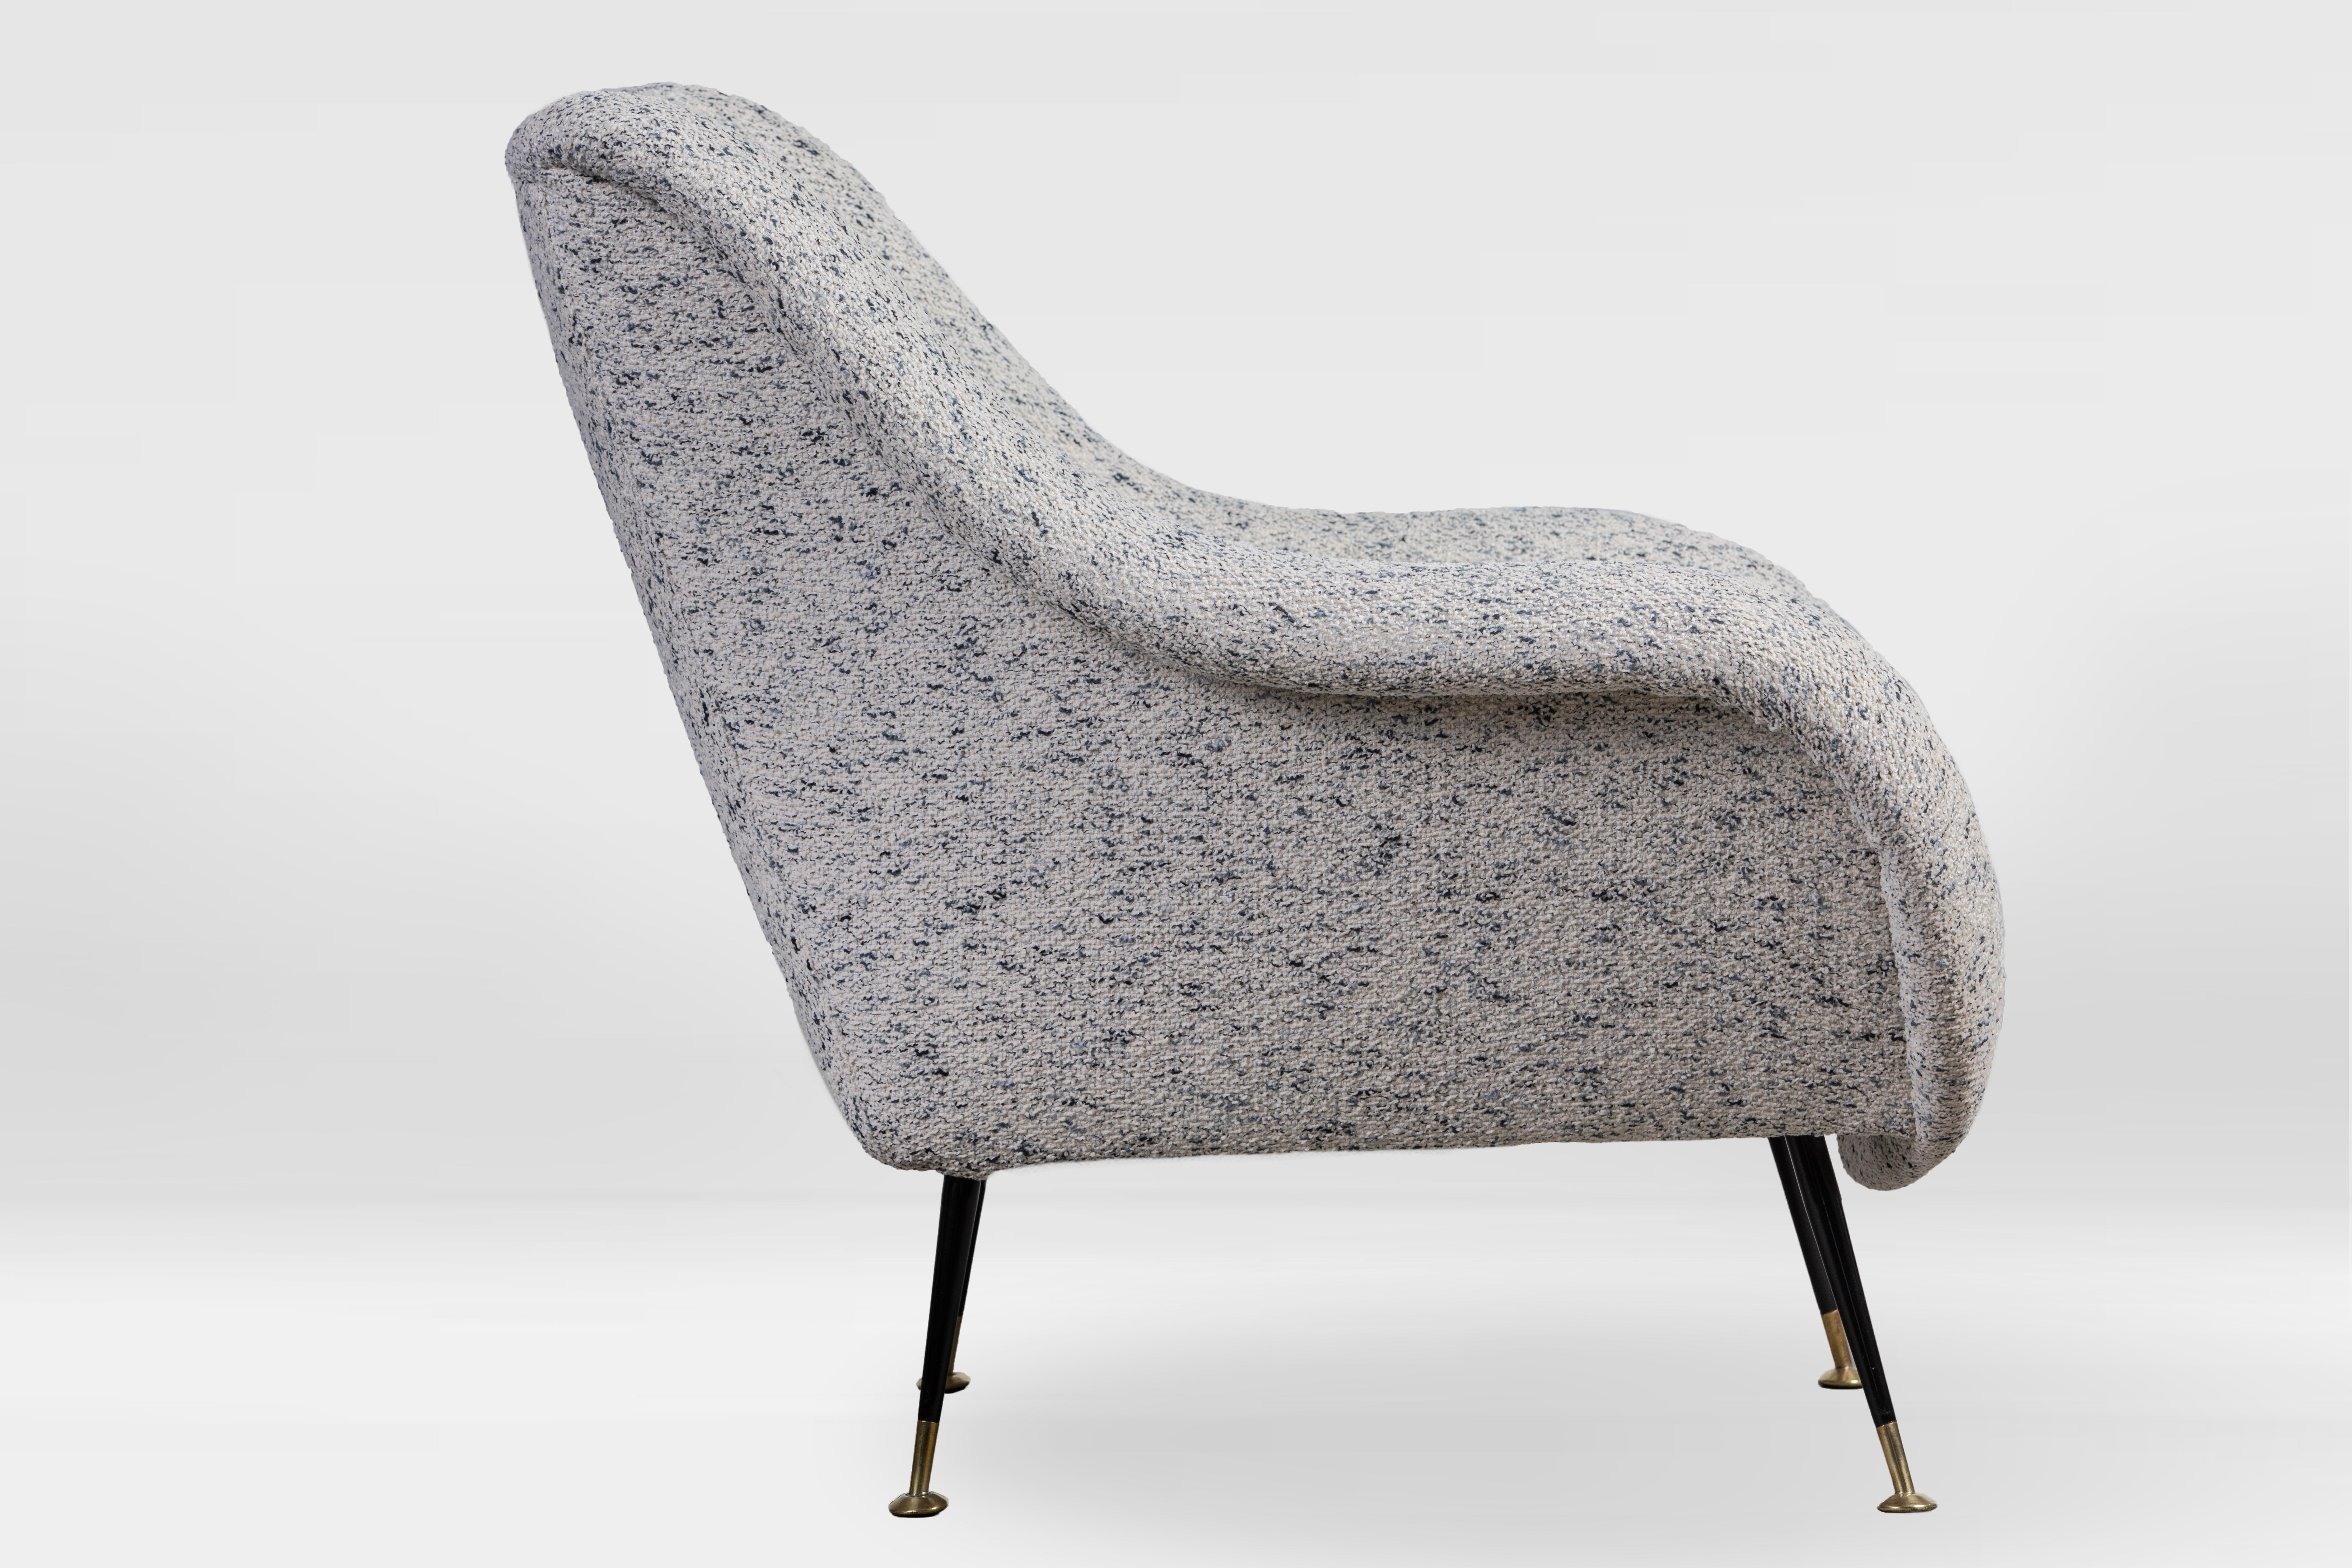 Italian Lounge Chair, Gigi Radice for Minotti, in Metaphores Bouclette For Sale 2